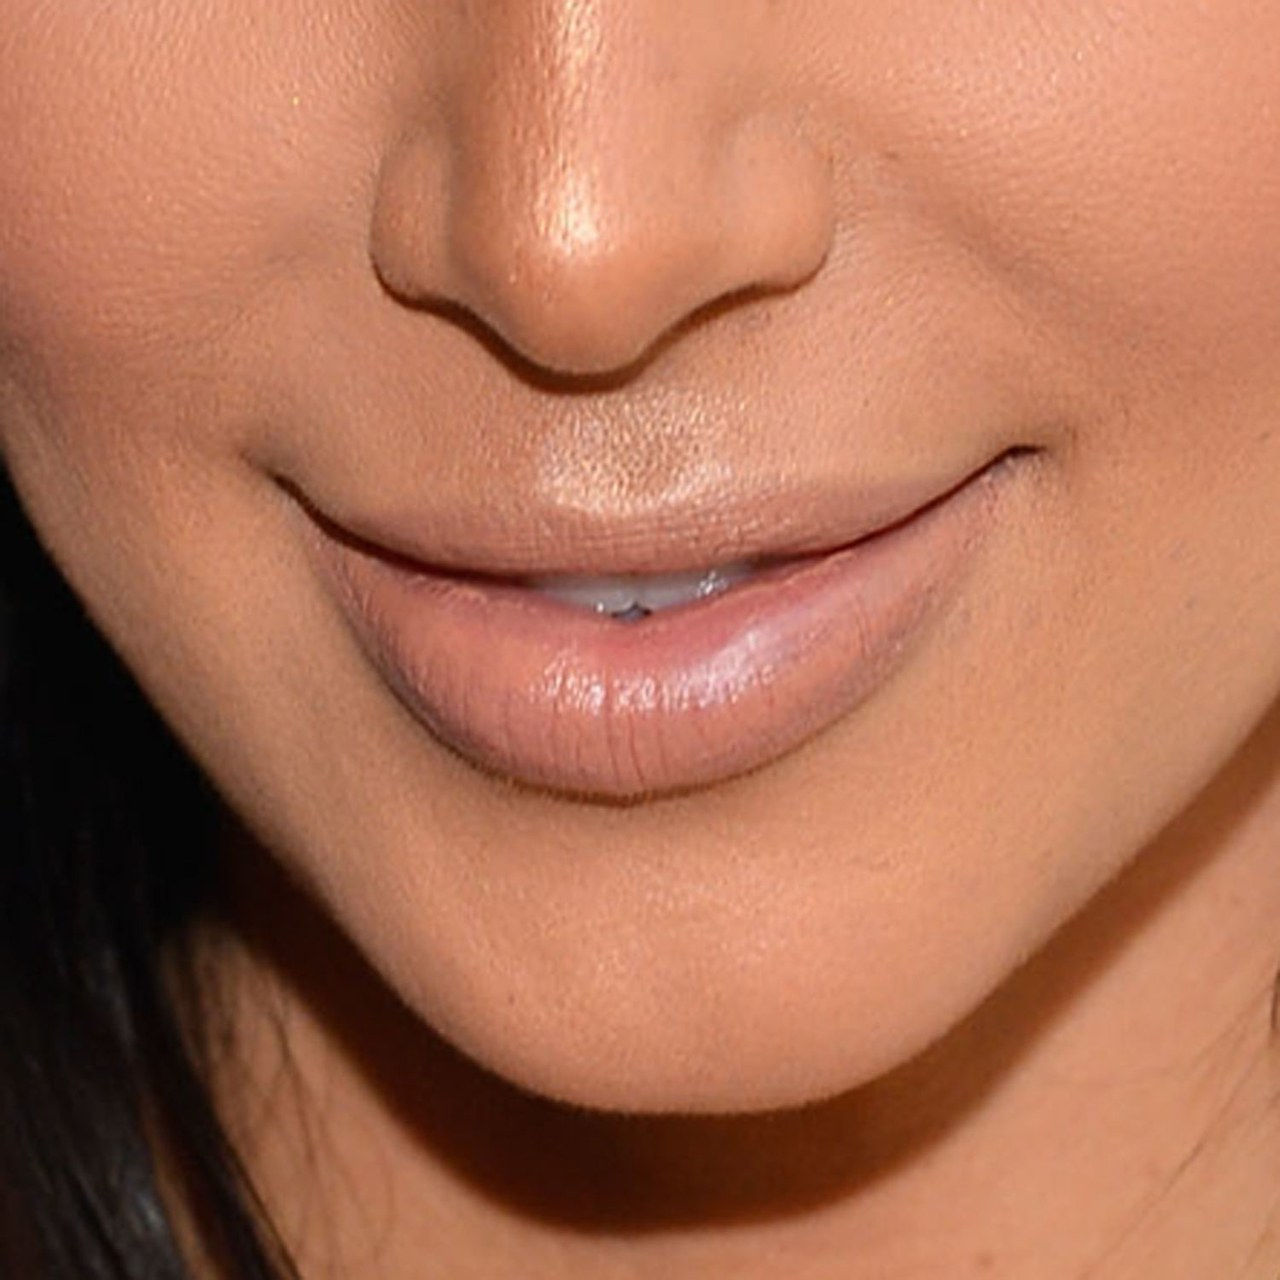 Kim kardashian shading lips close